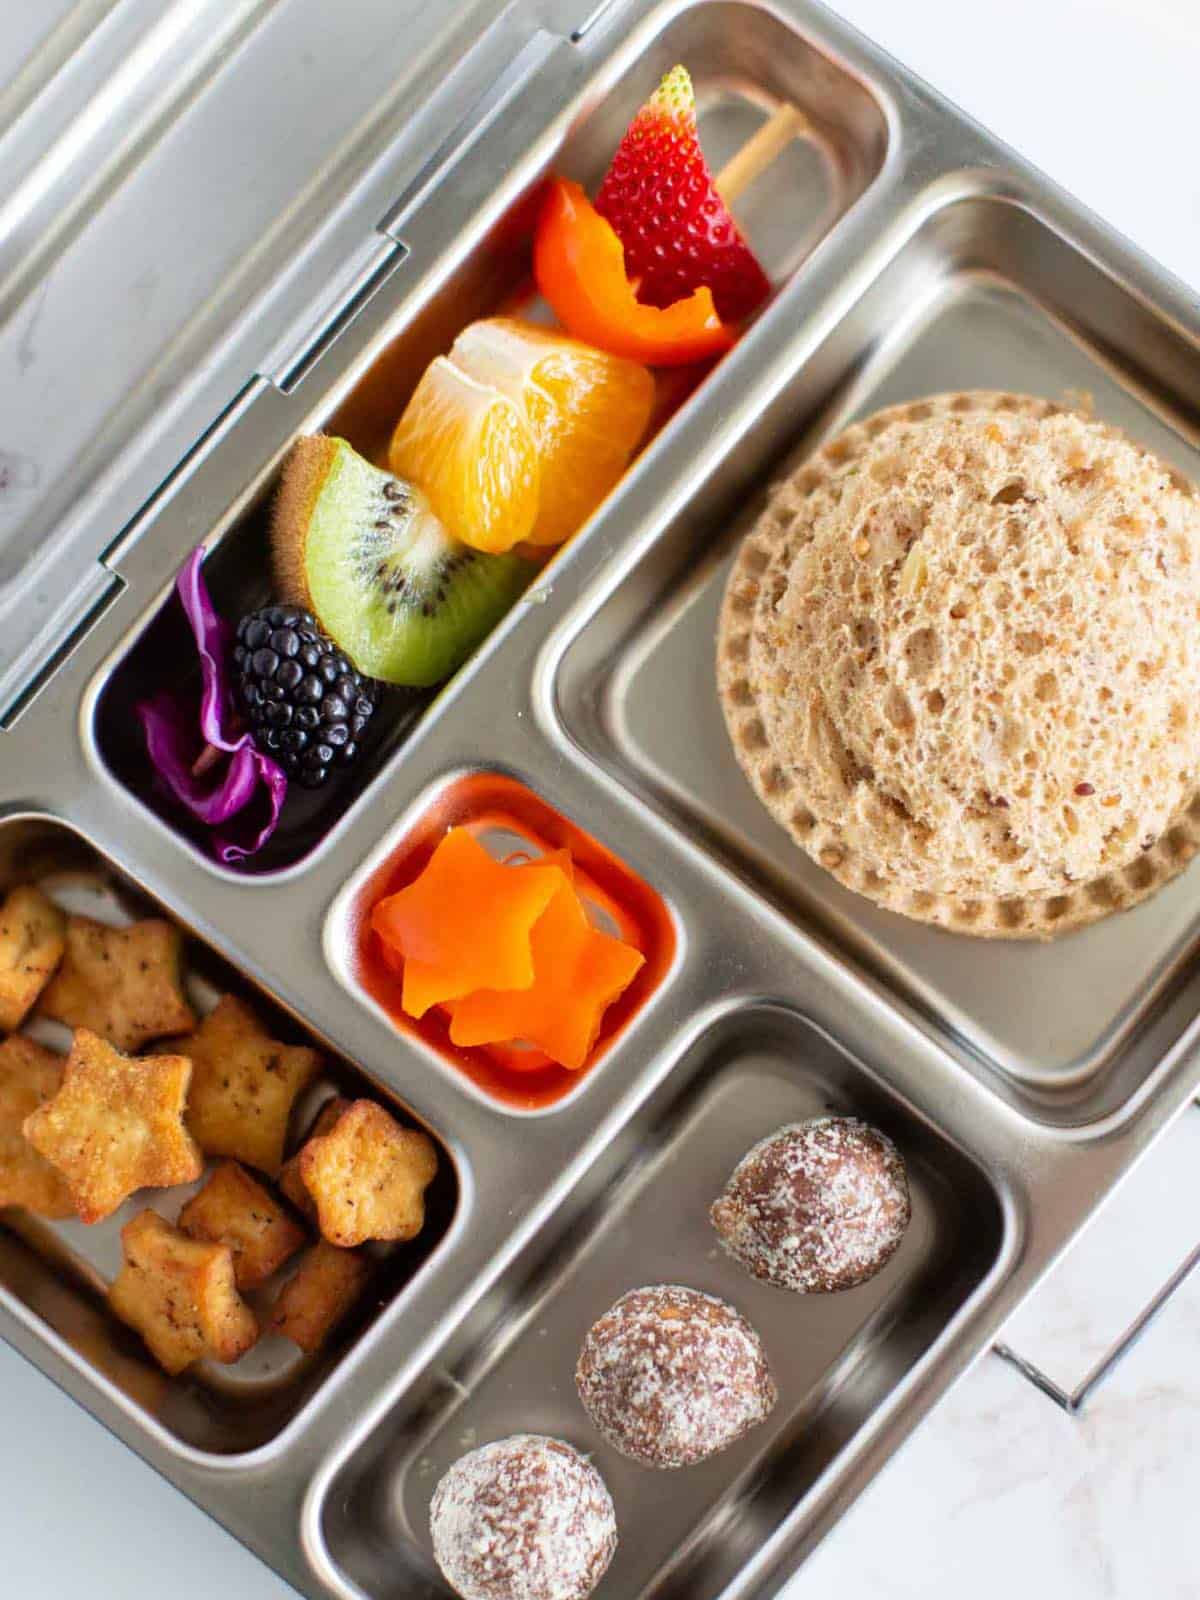 Planet Box stainless steel zero waste vegan kids lunchbox with fruit kebabs.